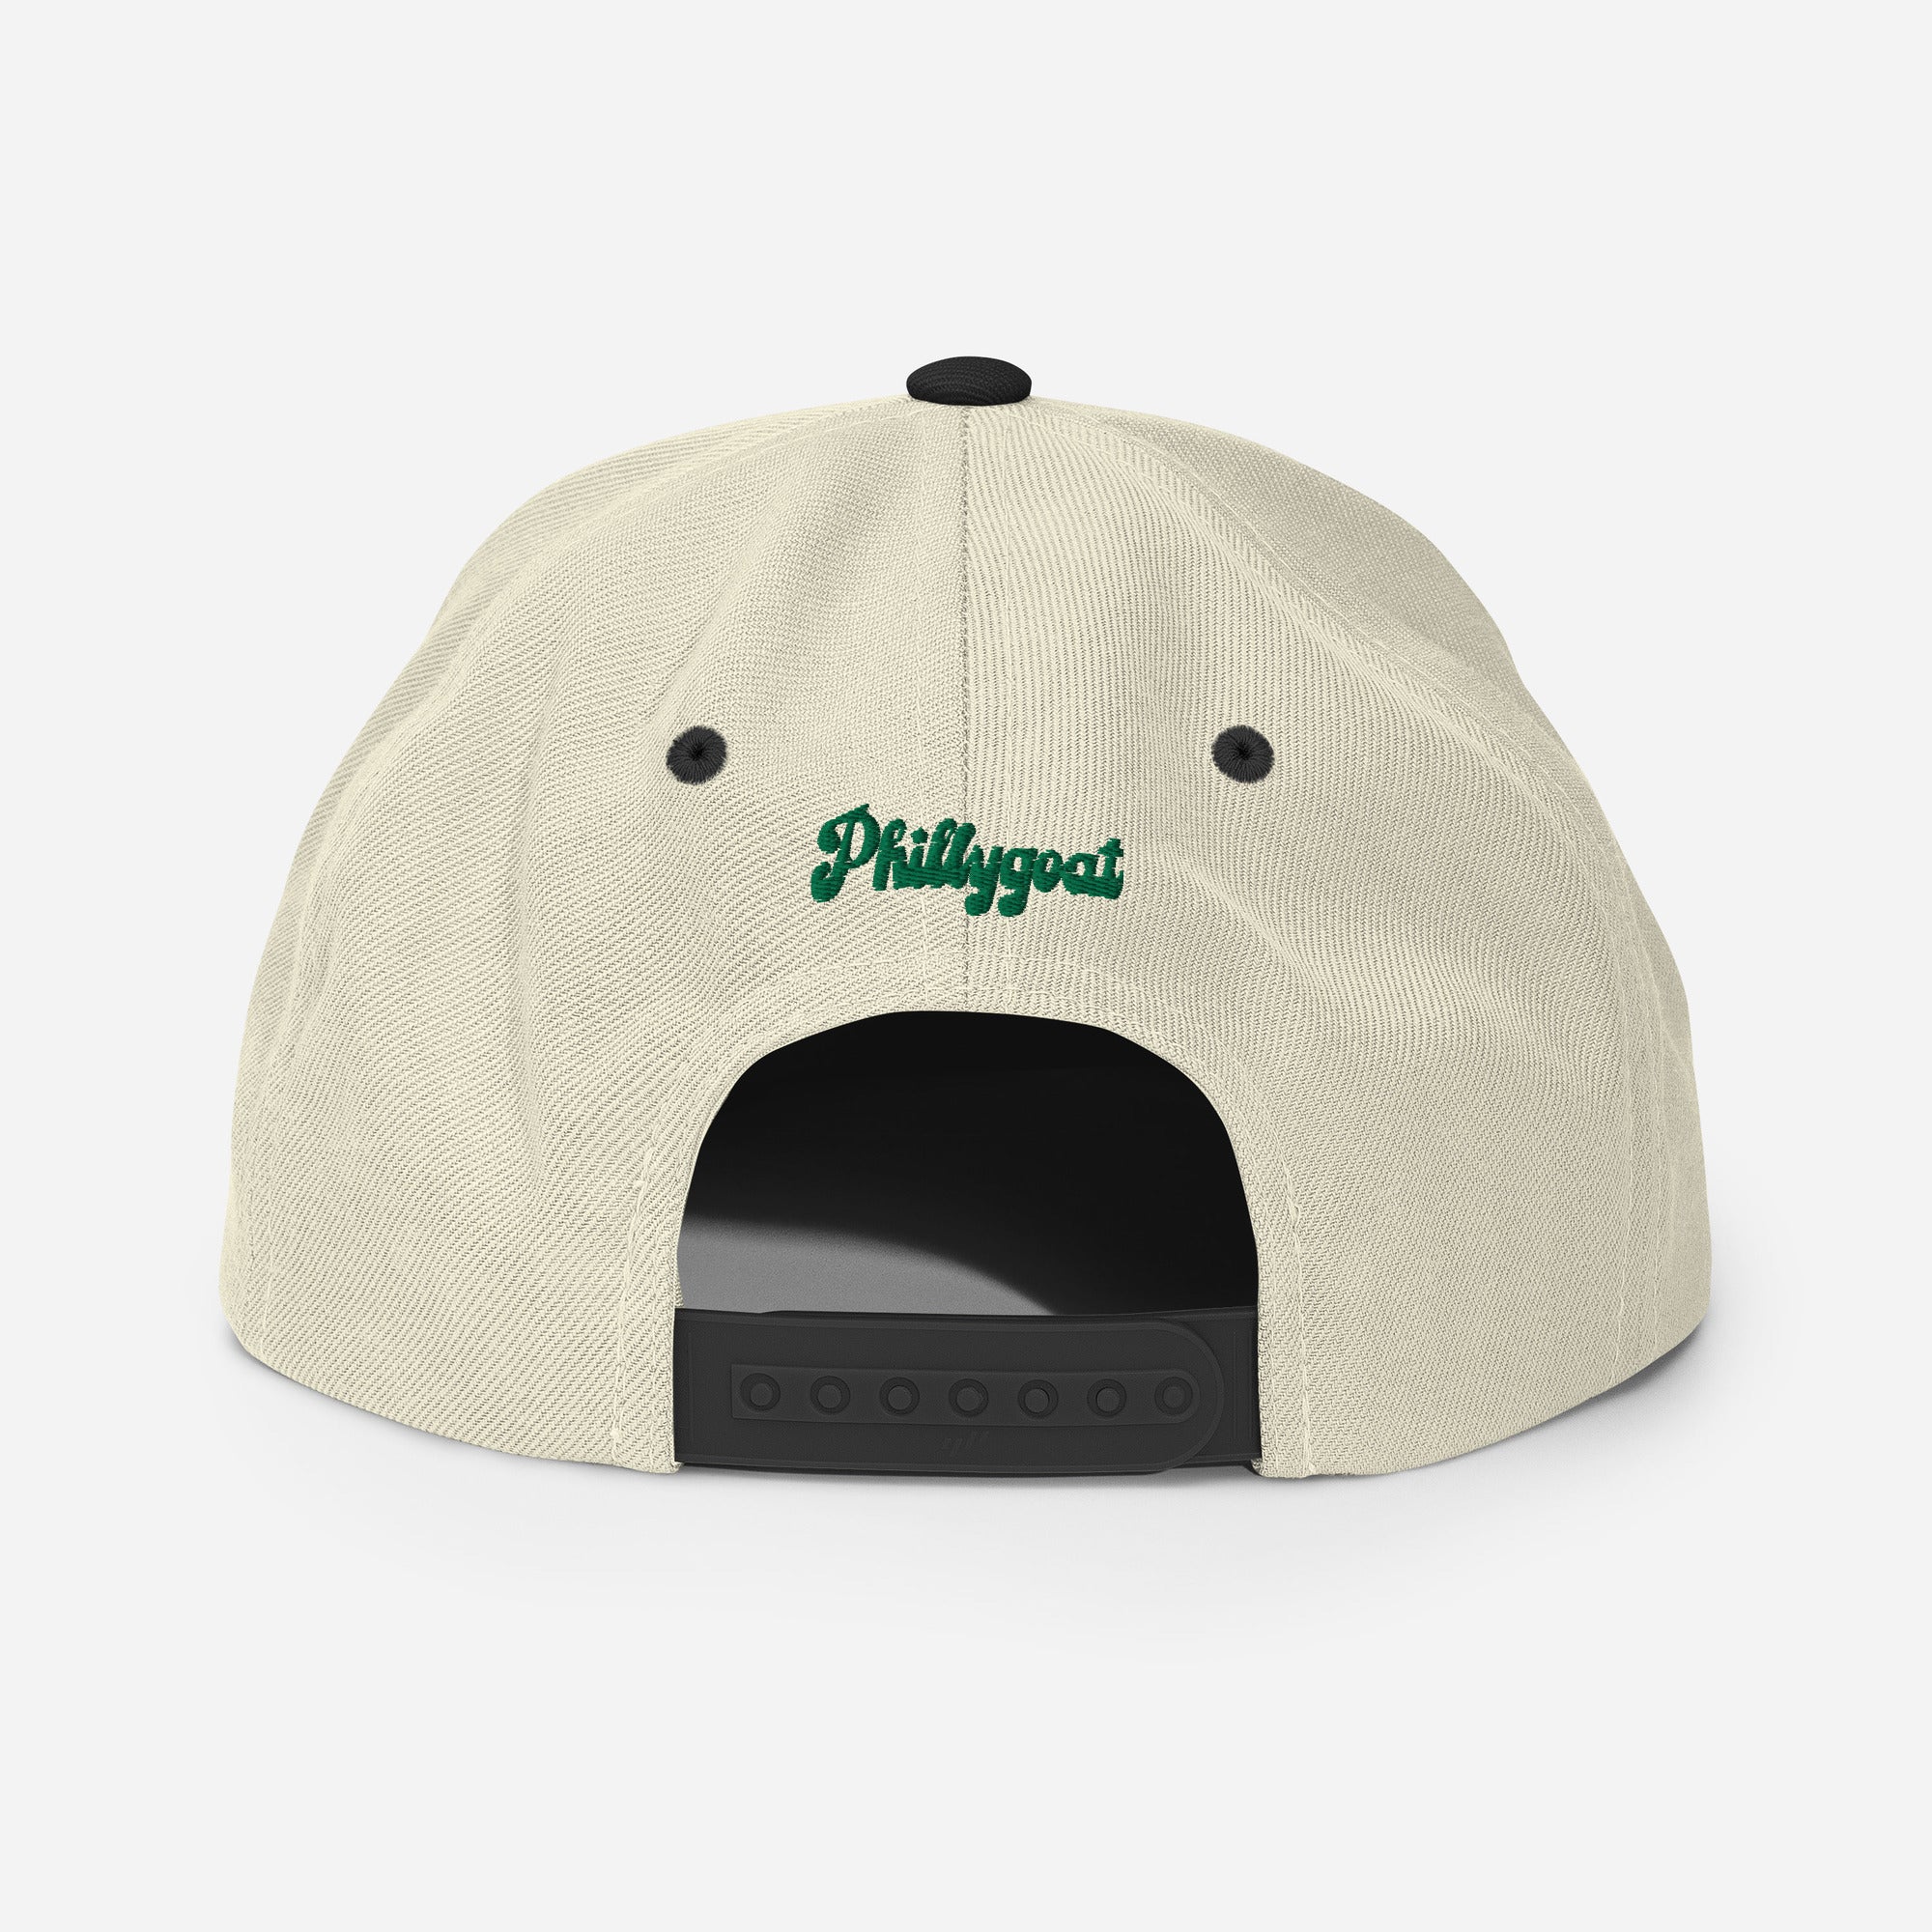 "Fluffya Iggles" Snapback Hat